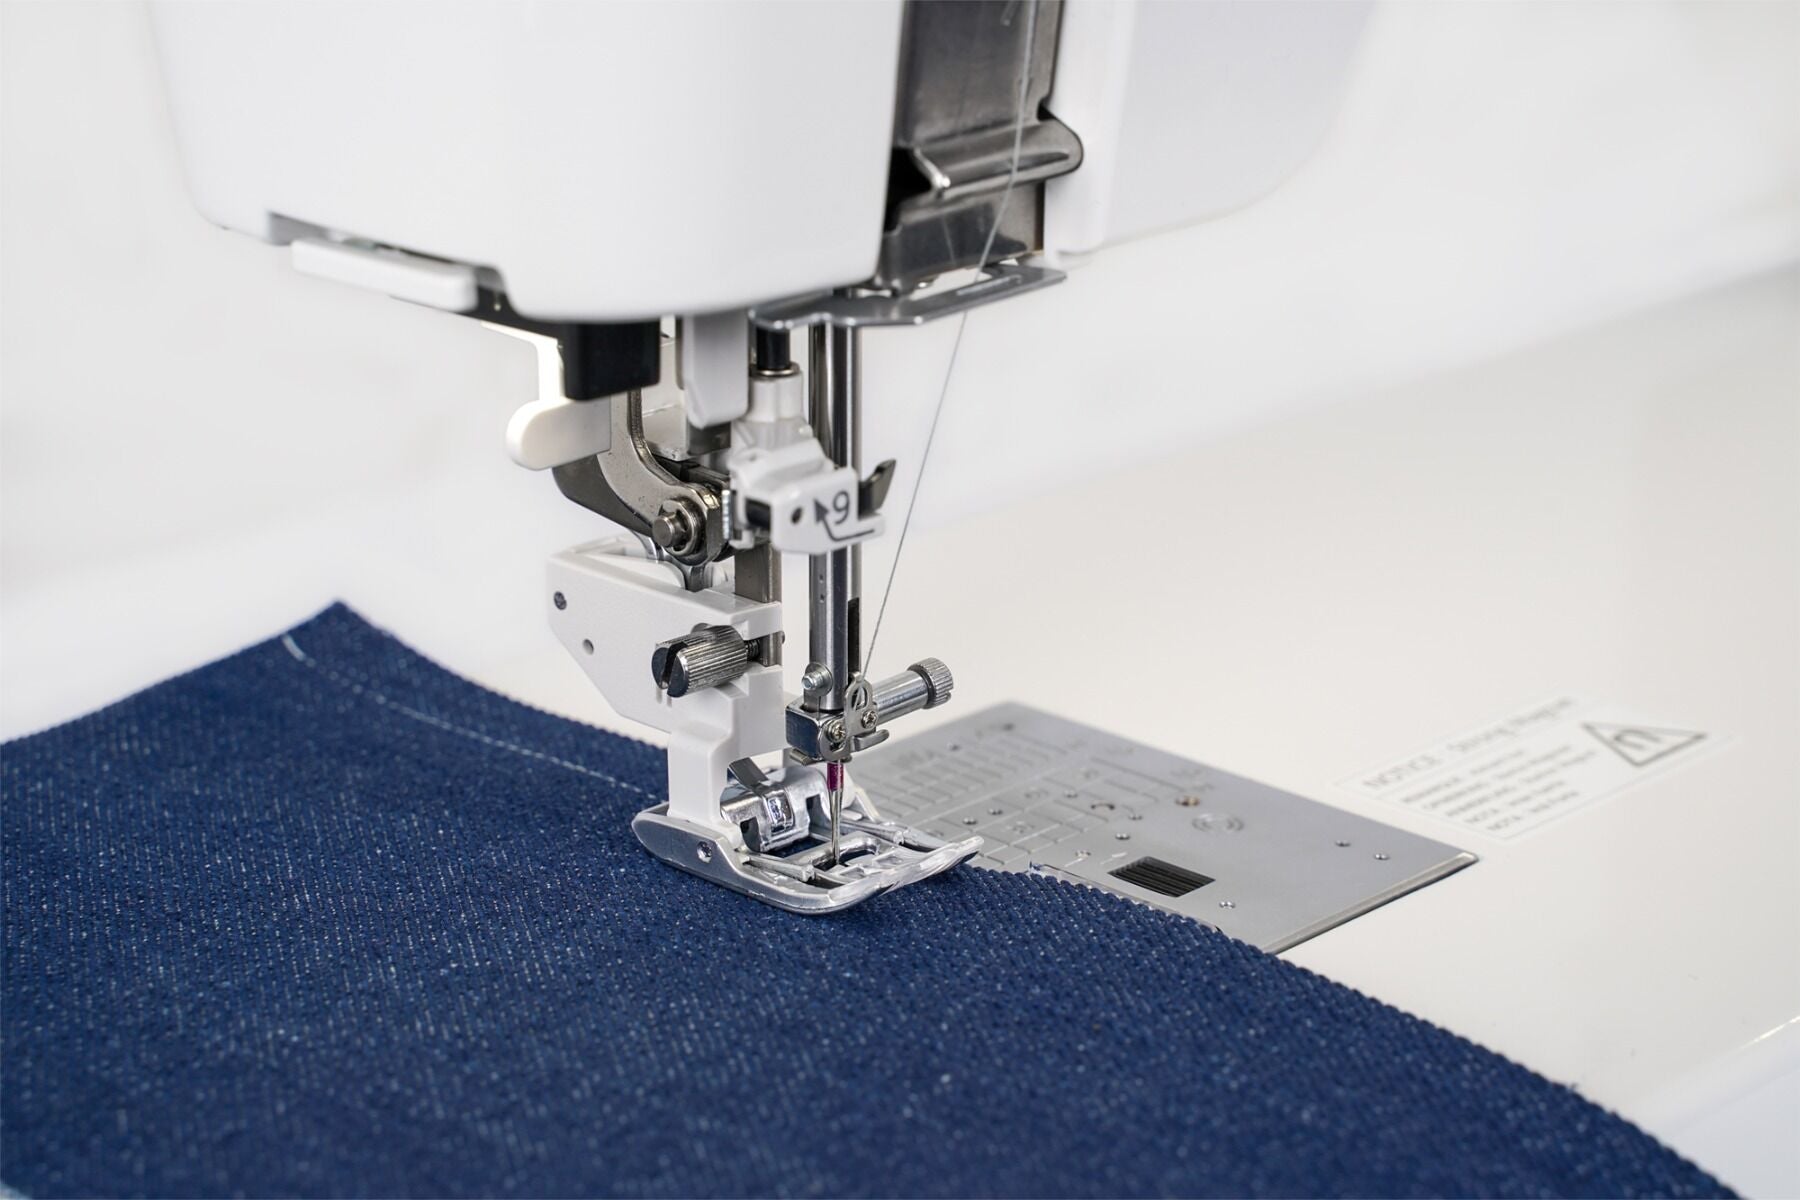 Narrow Body Zipper Presser Foot Attachment for Janome Sewing Machine 